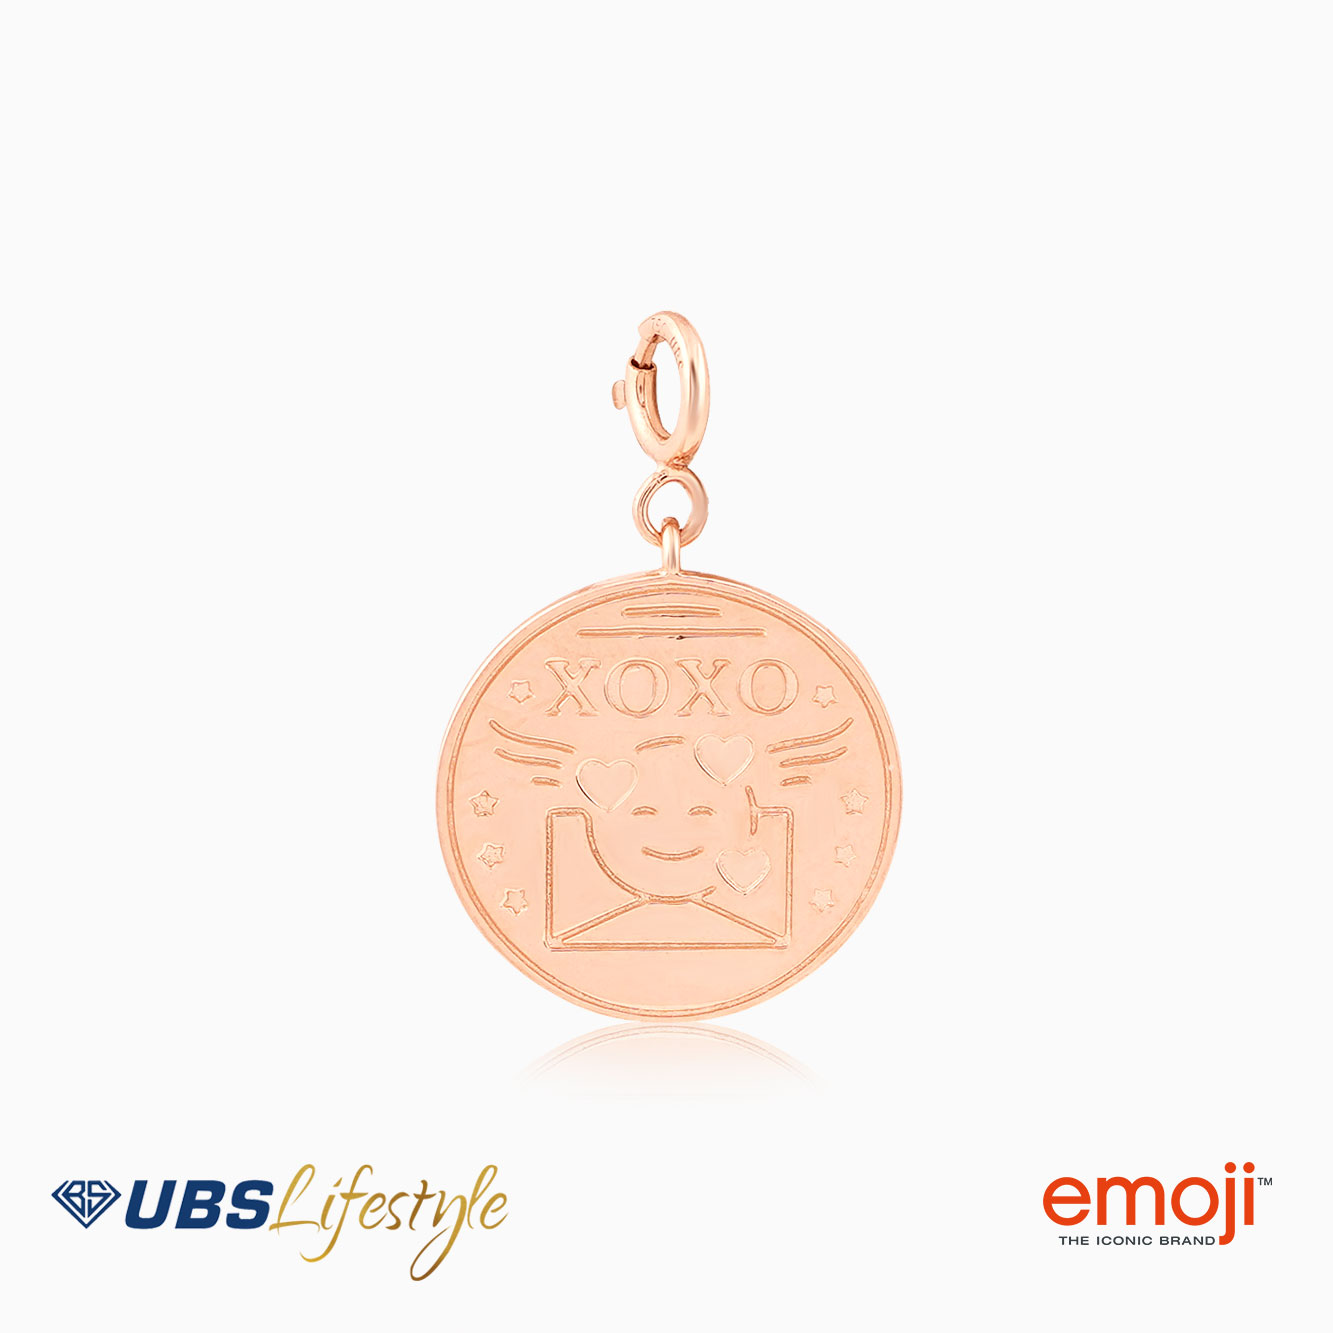 UBS Liontin Emas Emoji - Cmq0012R - 17K